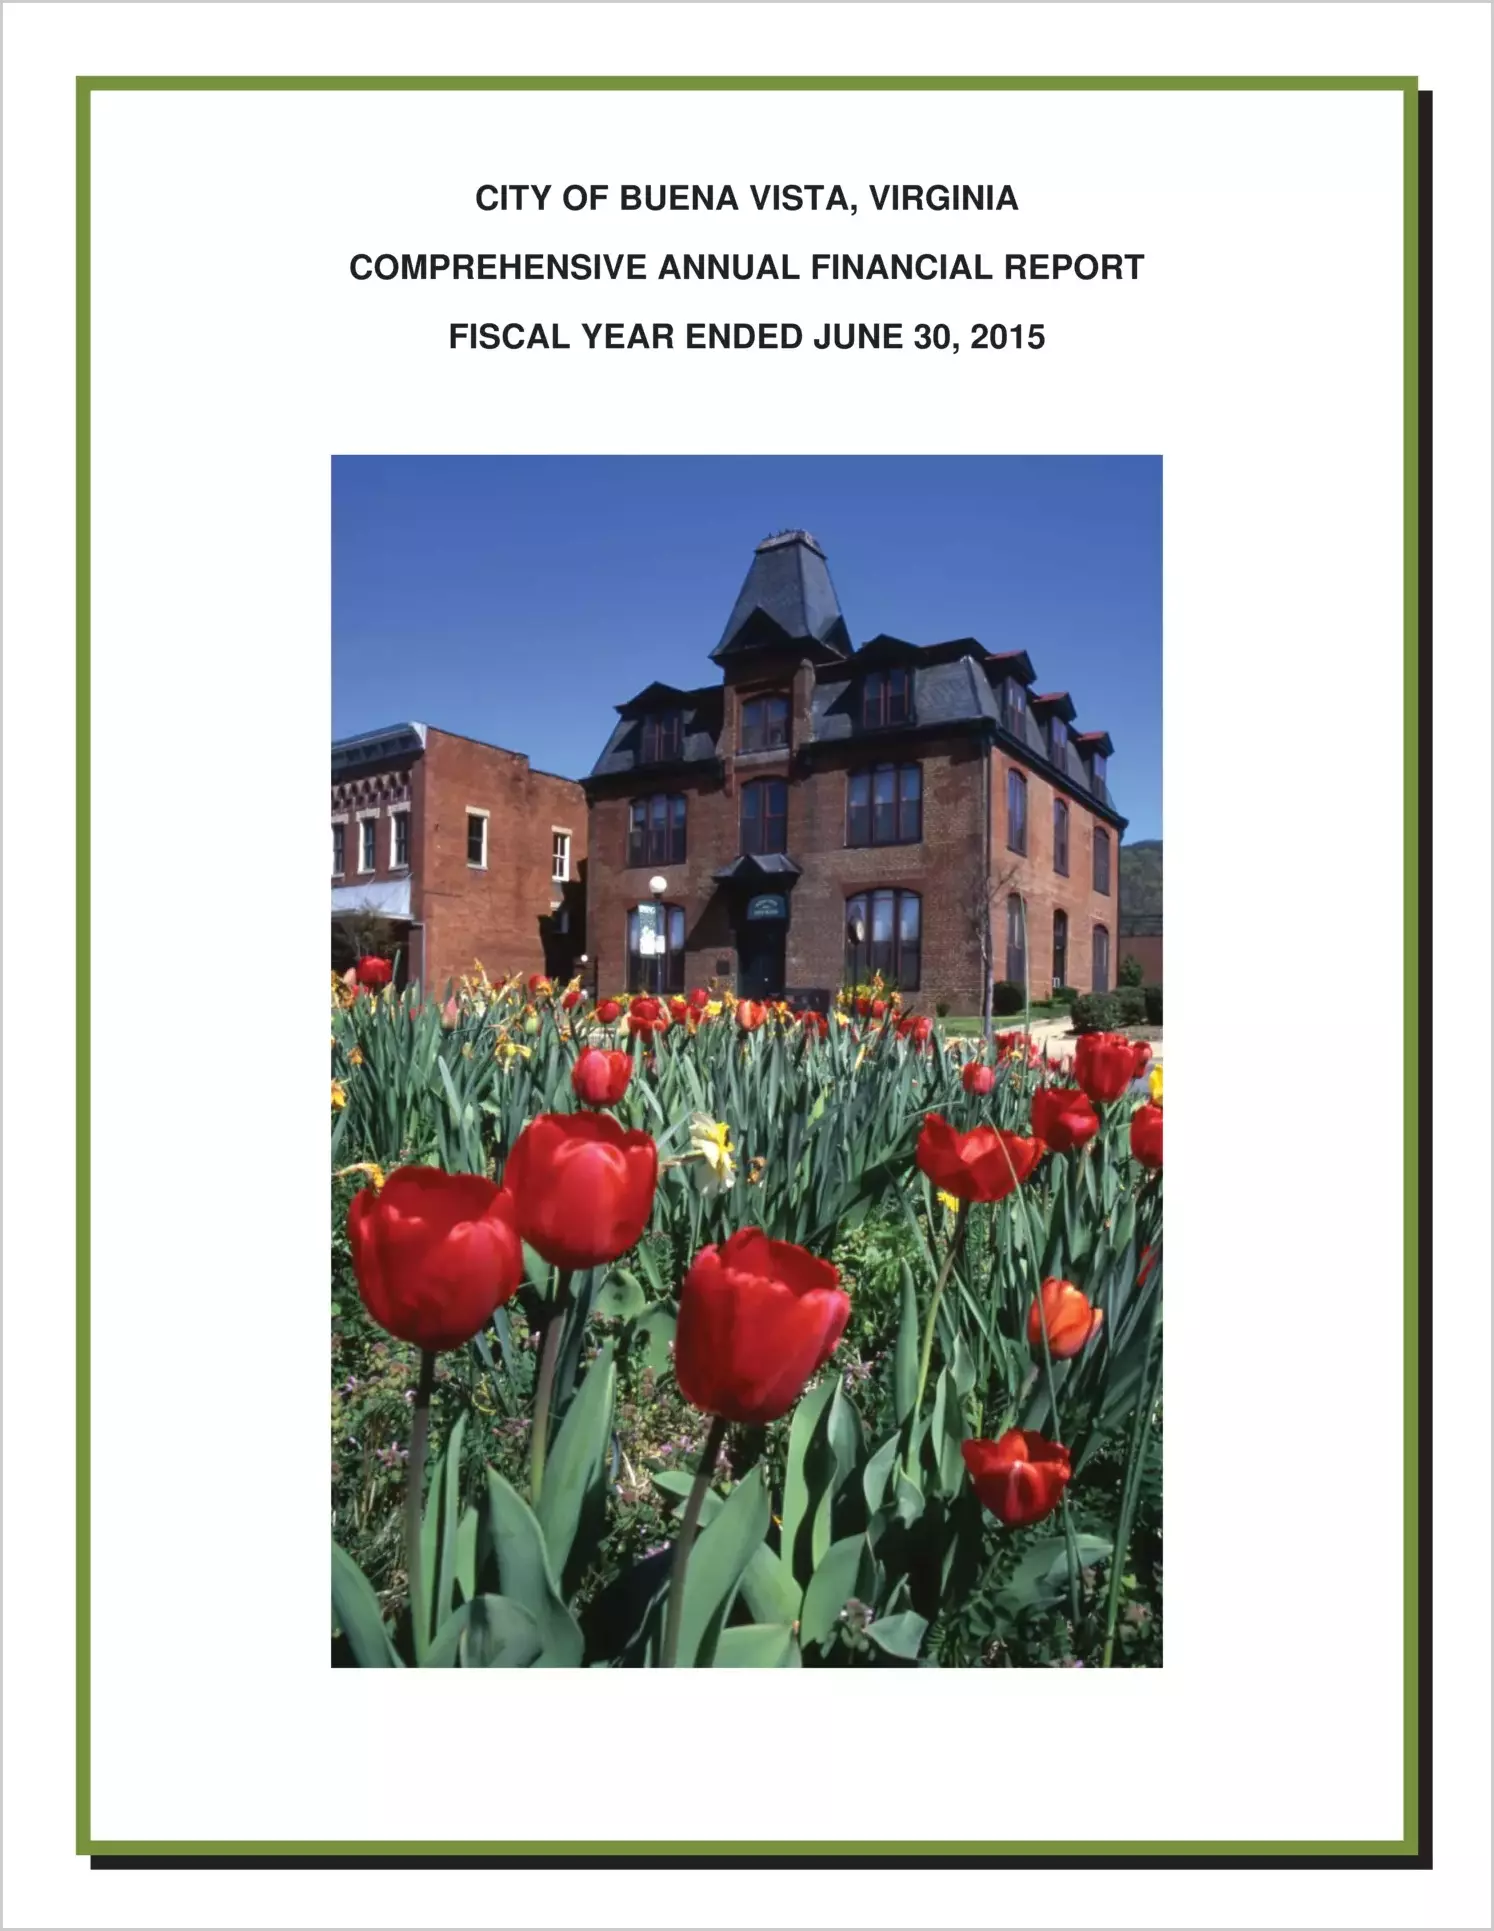 2015 Annual Financial Report for City of Buena Vista